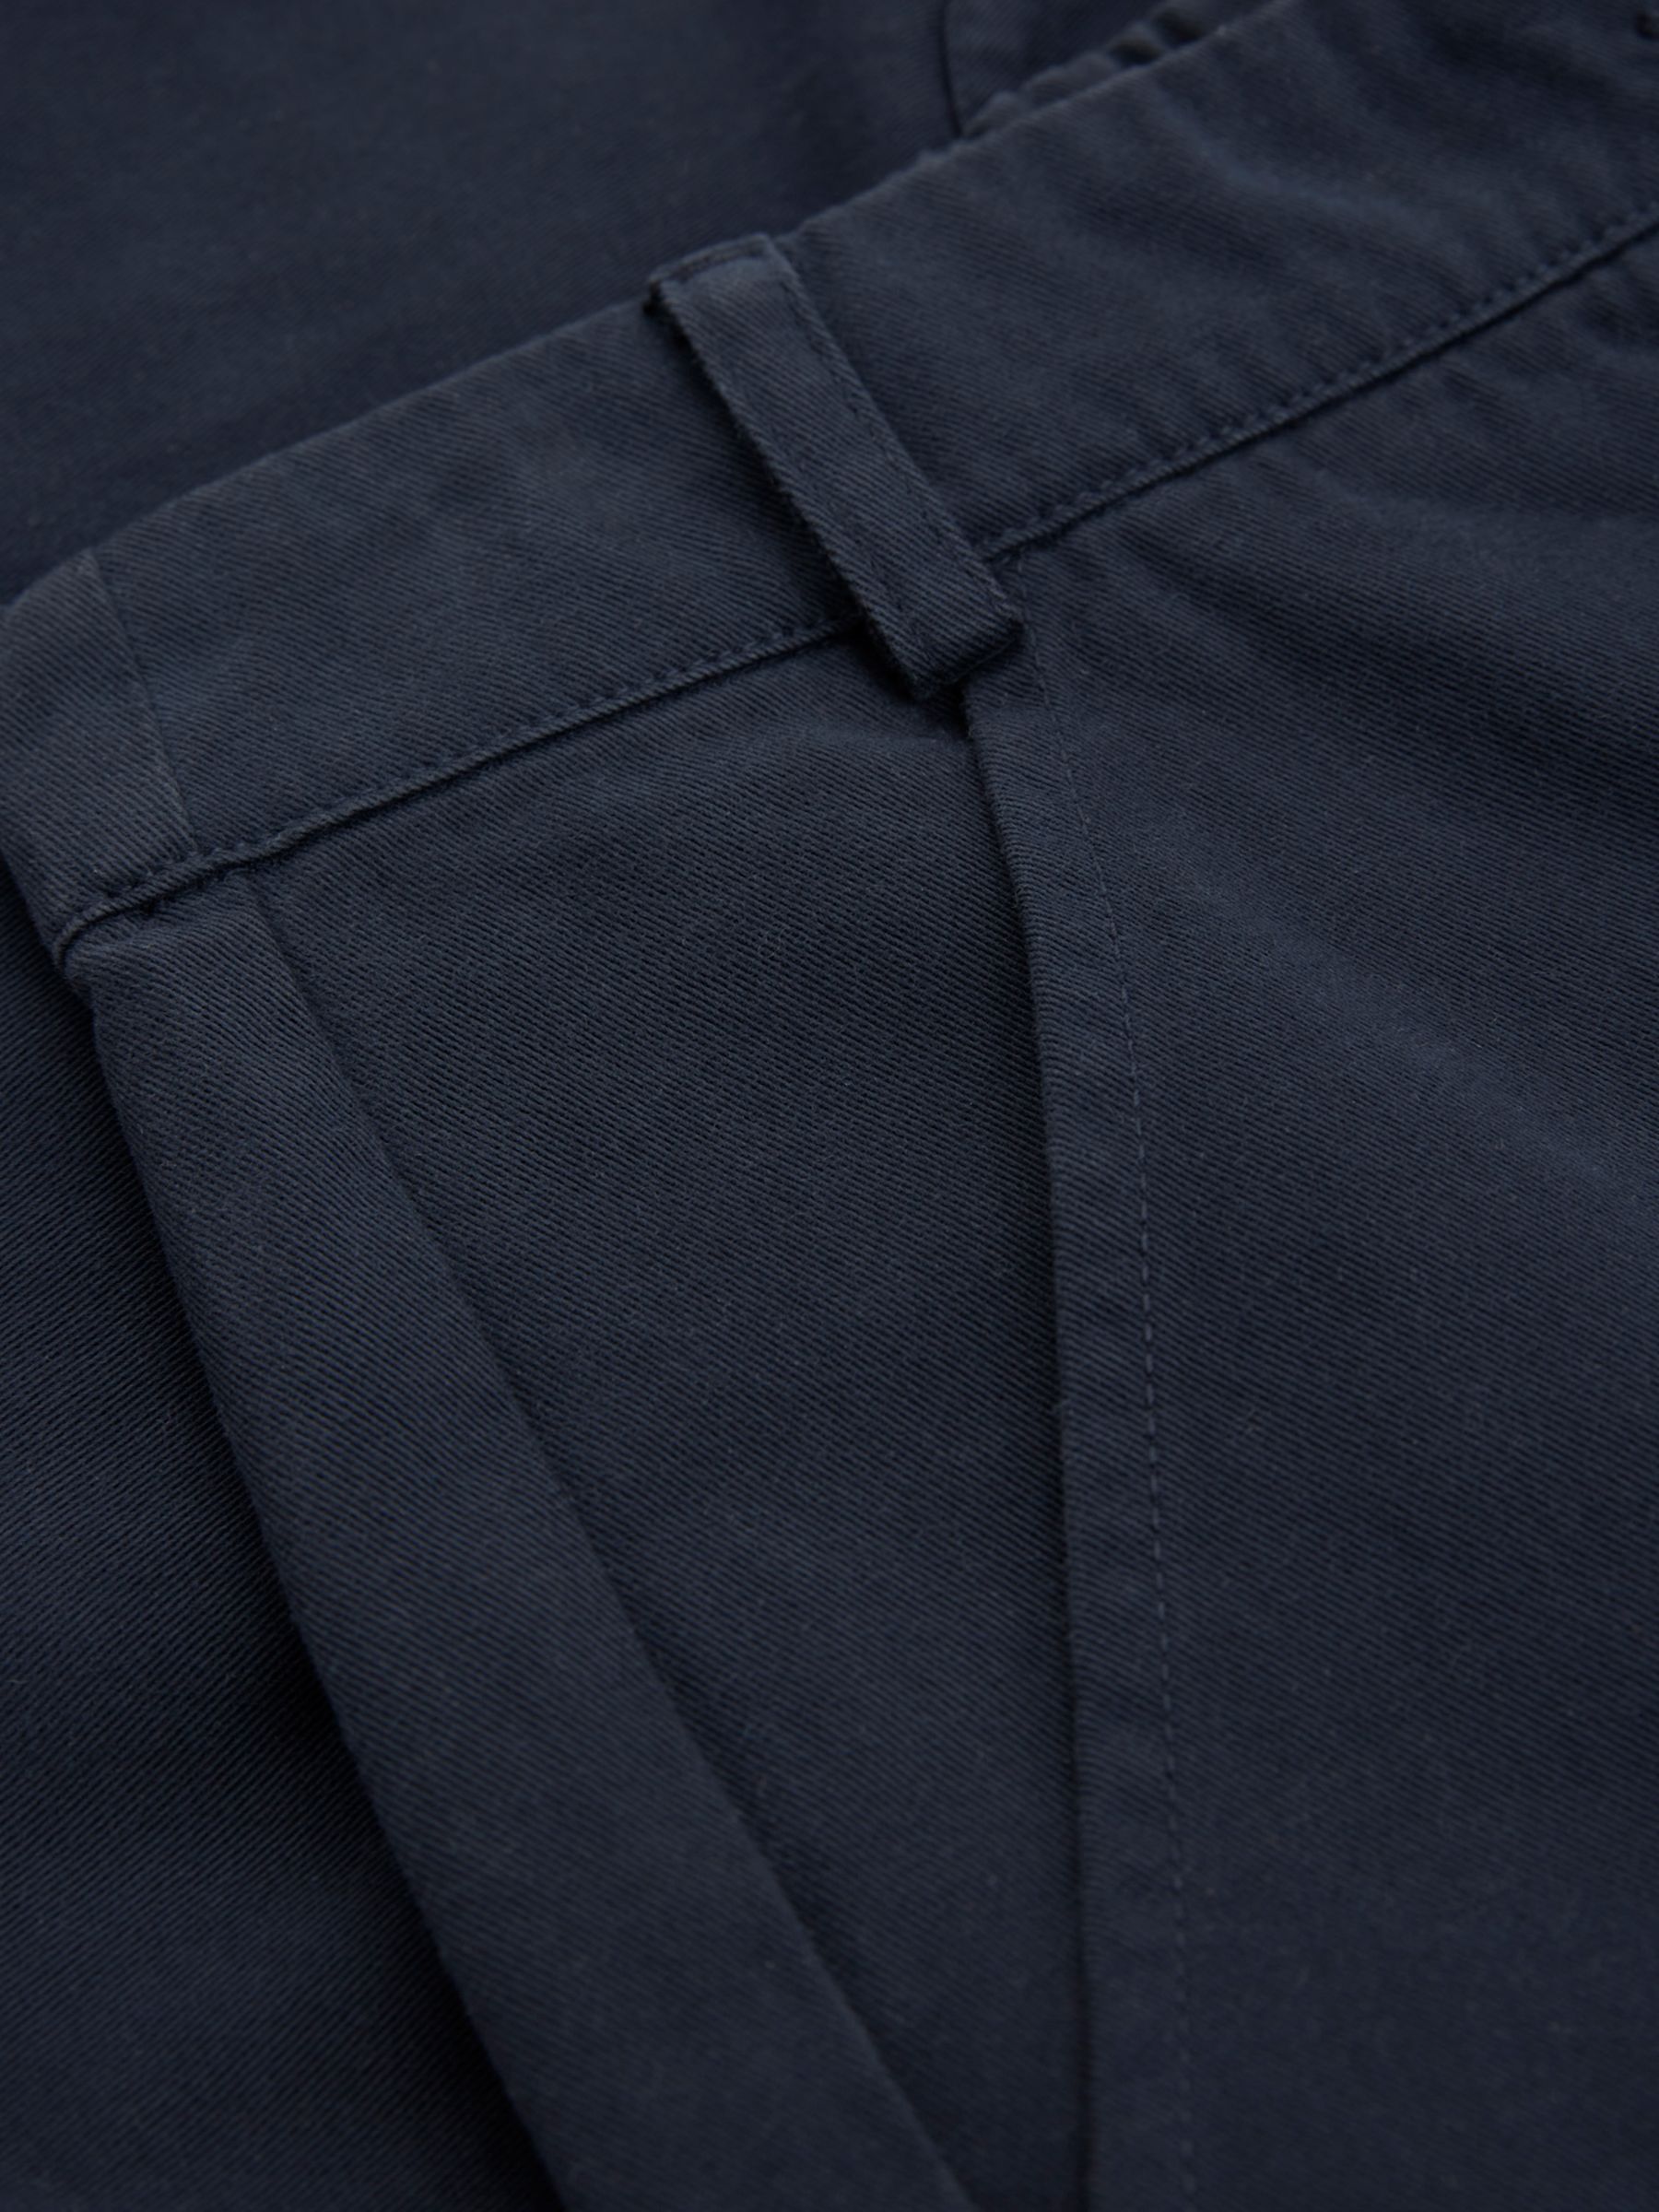 Celtic & Co. Slim Cotton Shorts, Dark Navy at John Lewis & Partners